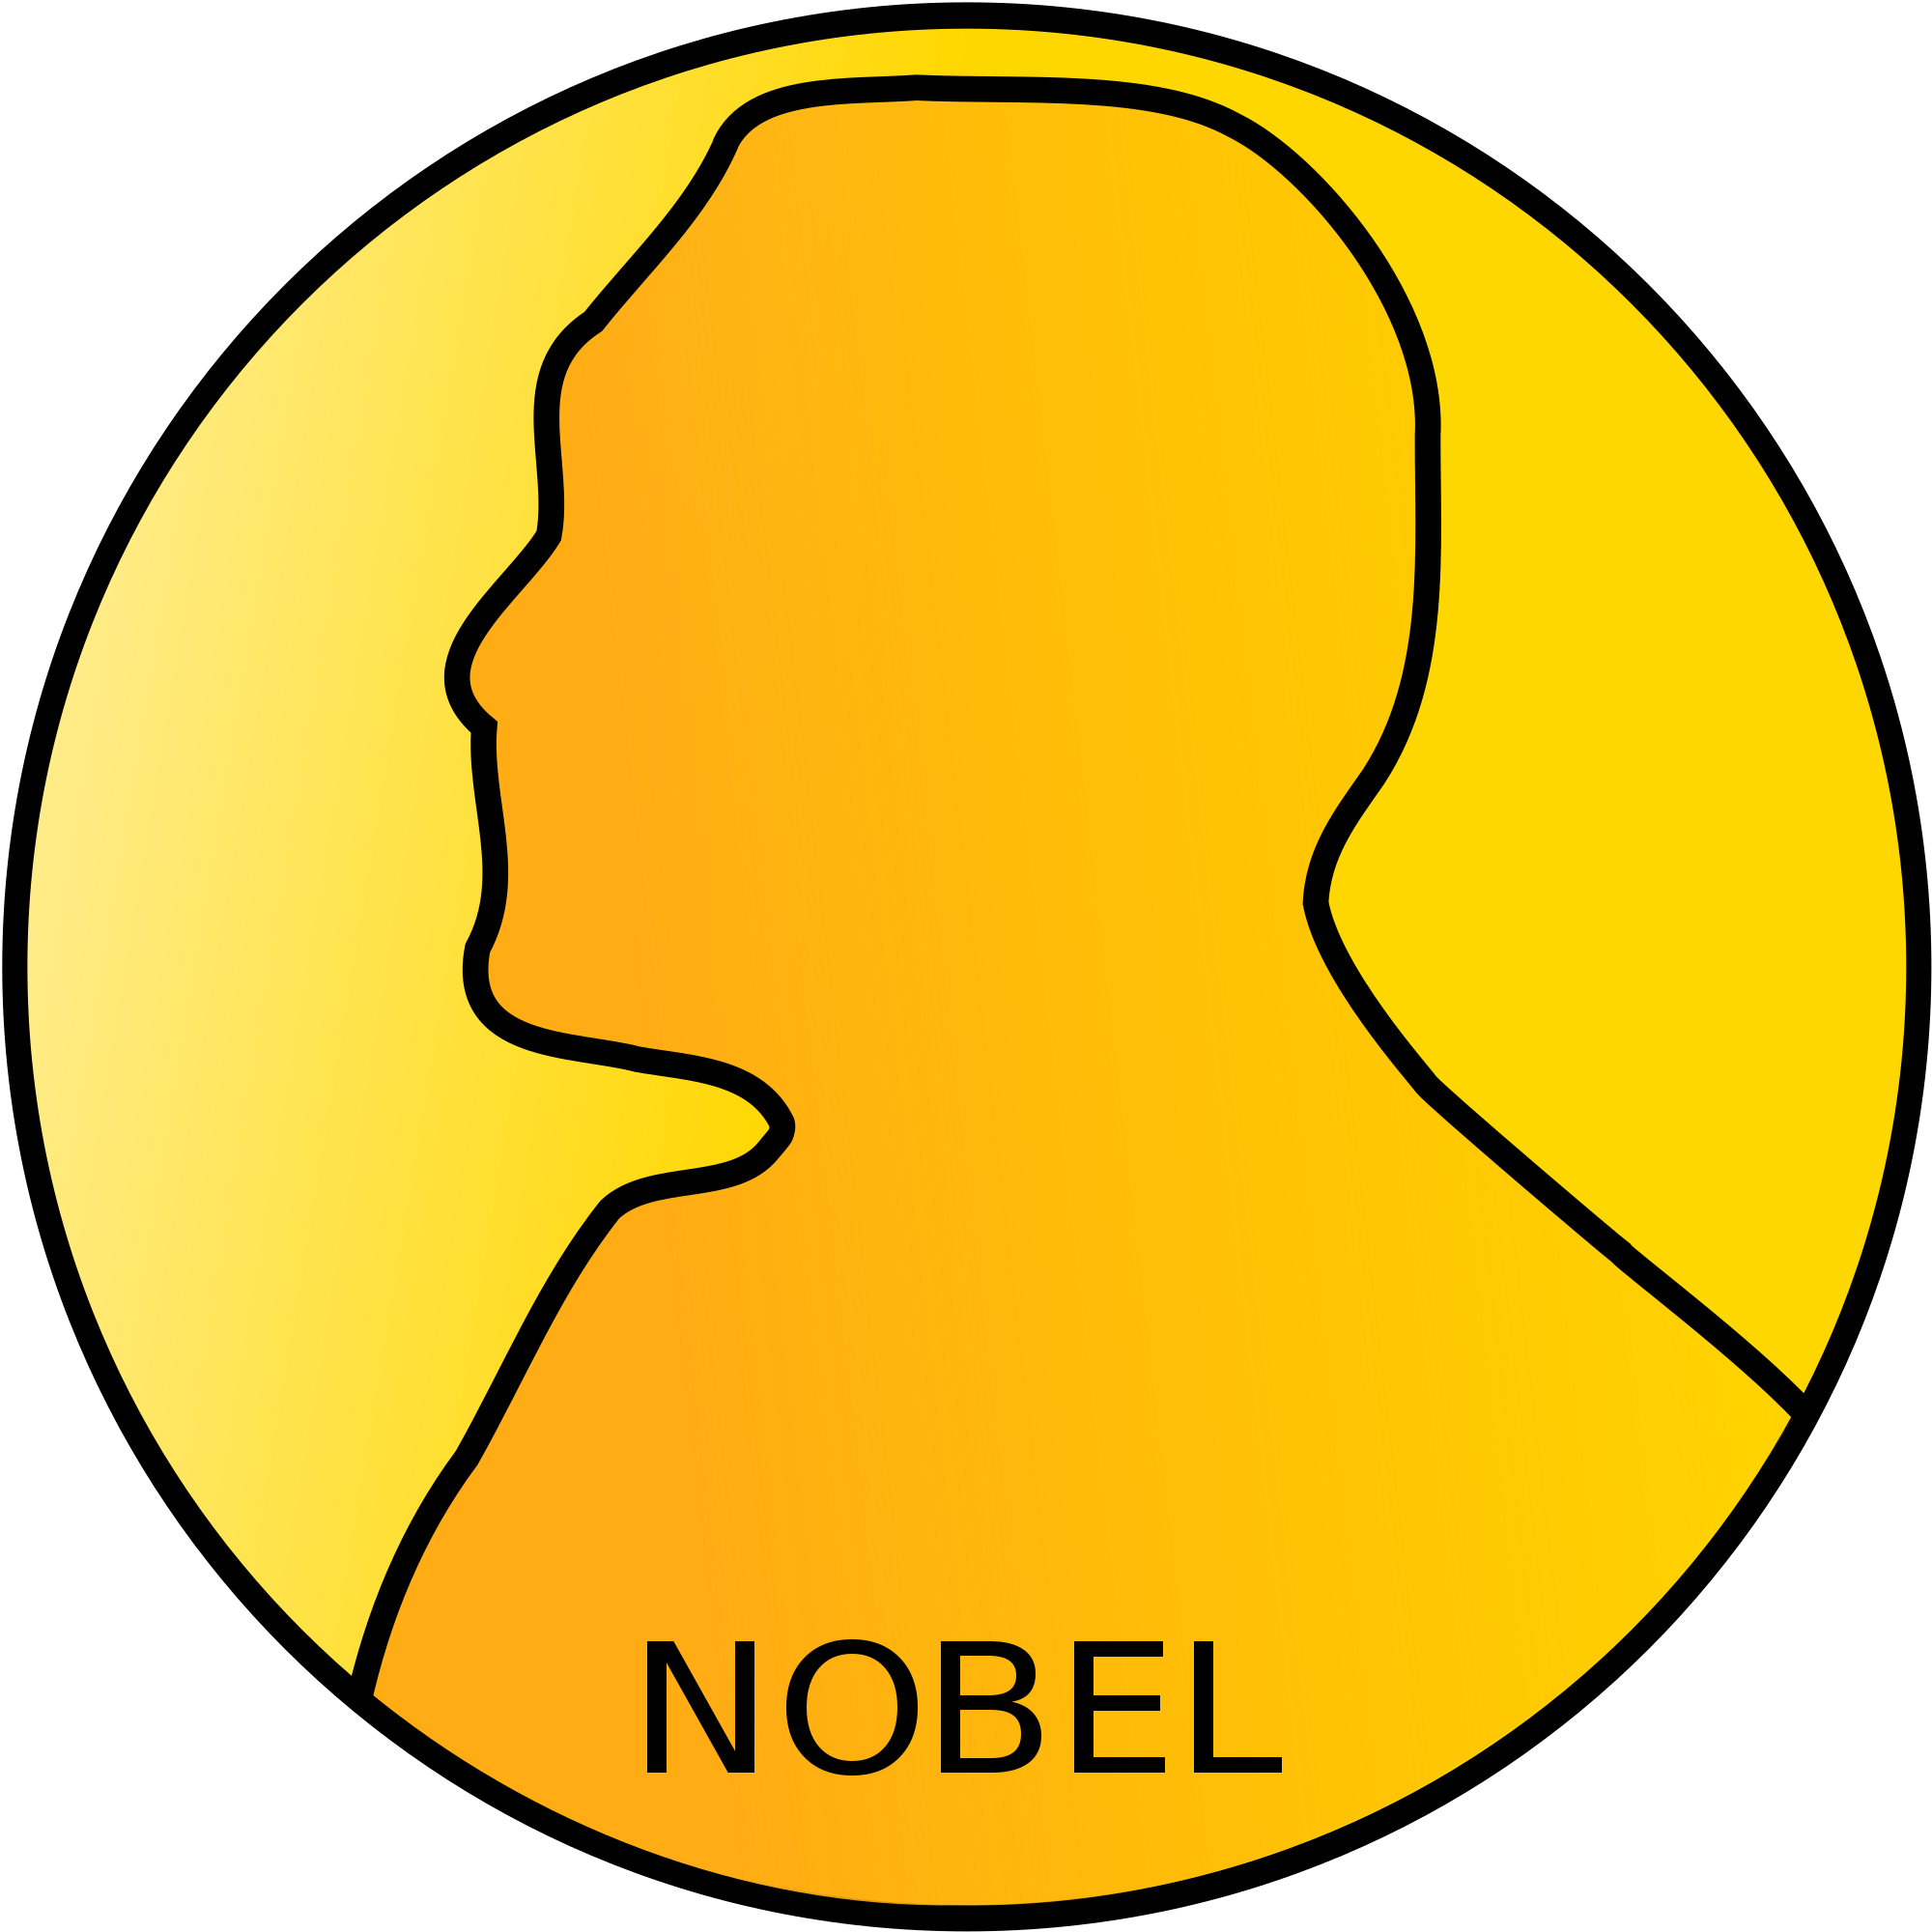 Prize clipart svg. File nobel medal wikimedia